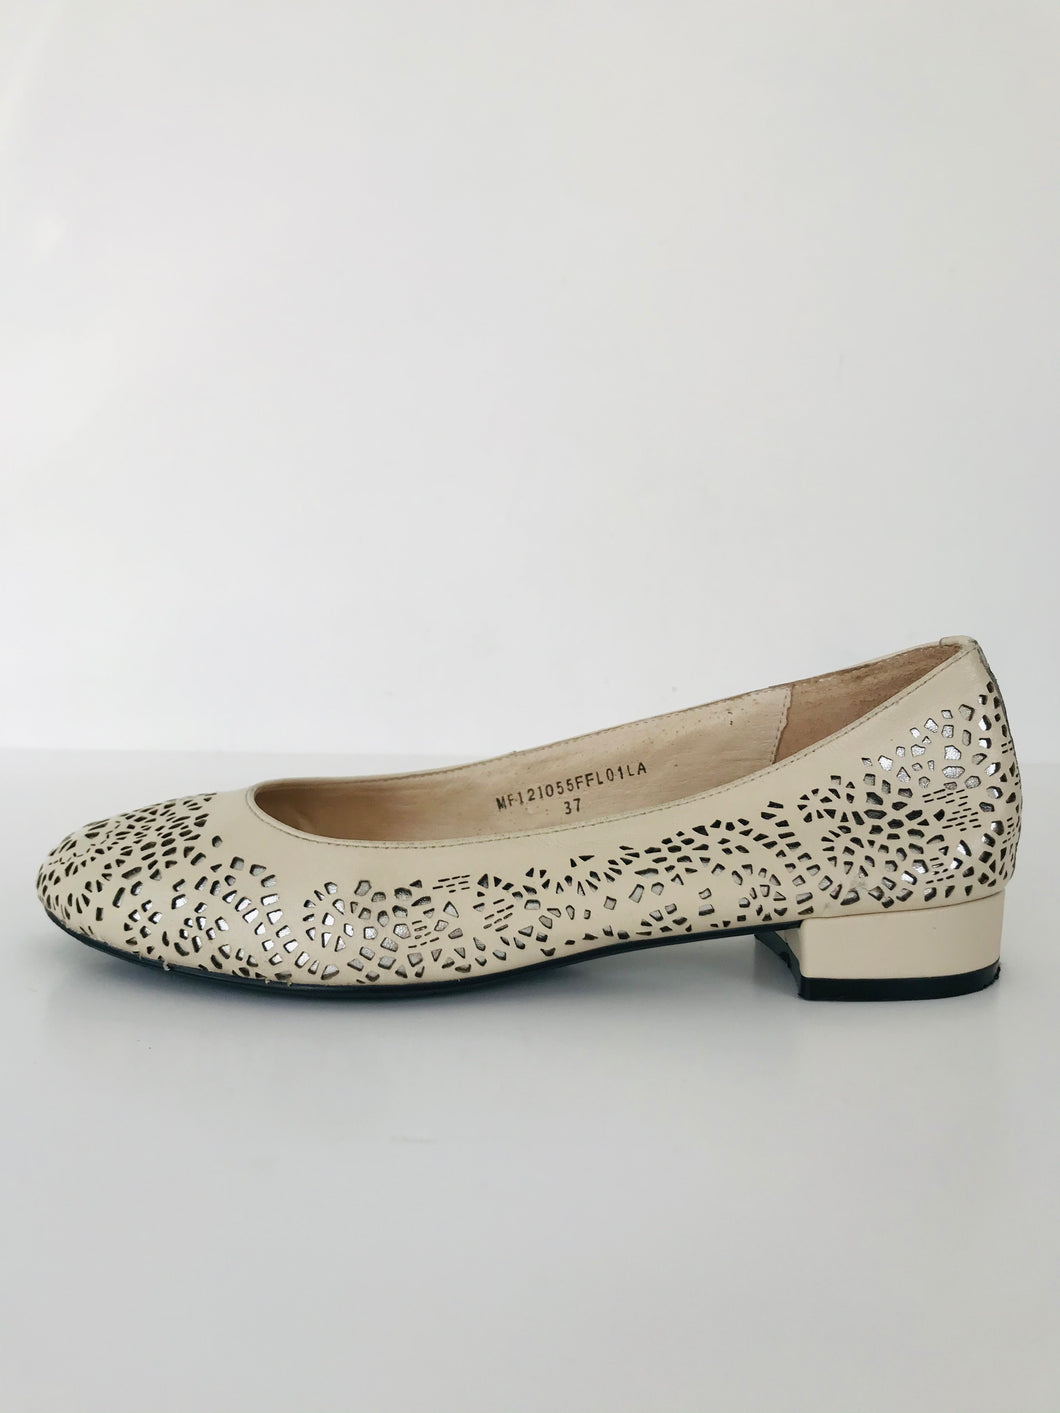 Maud Frizon Women’s Leather Slip On Ballet Pump Shoes | UK4 | Pink